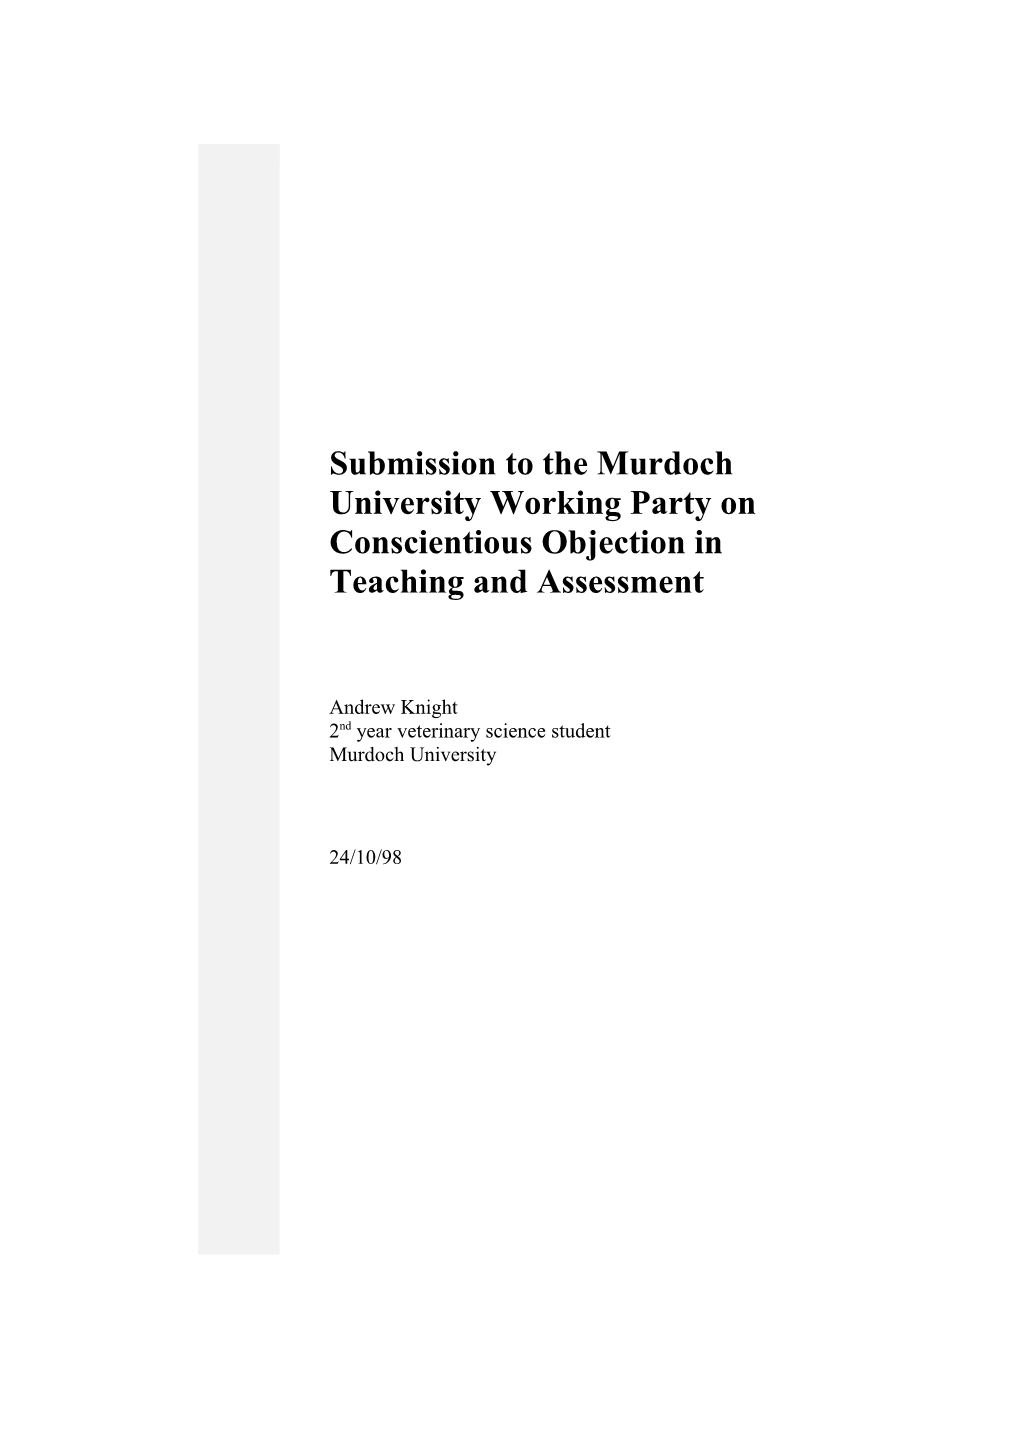 Murdoch University Objections & Counter Arguments